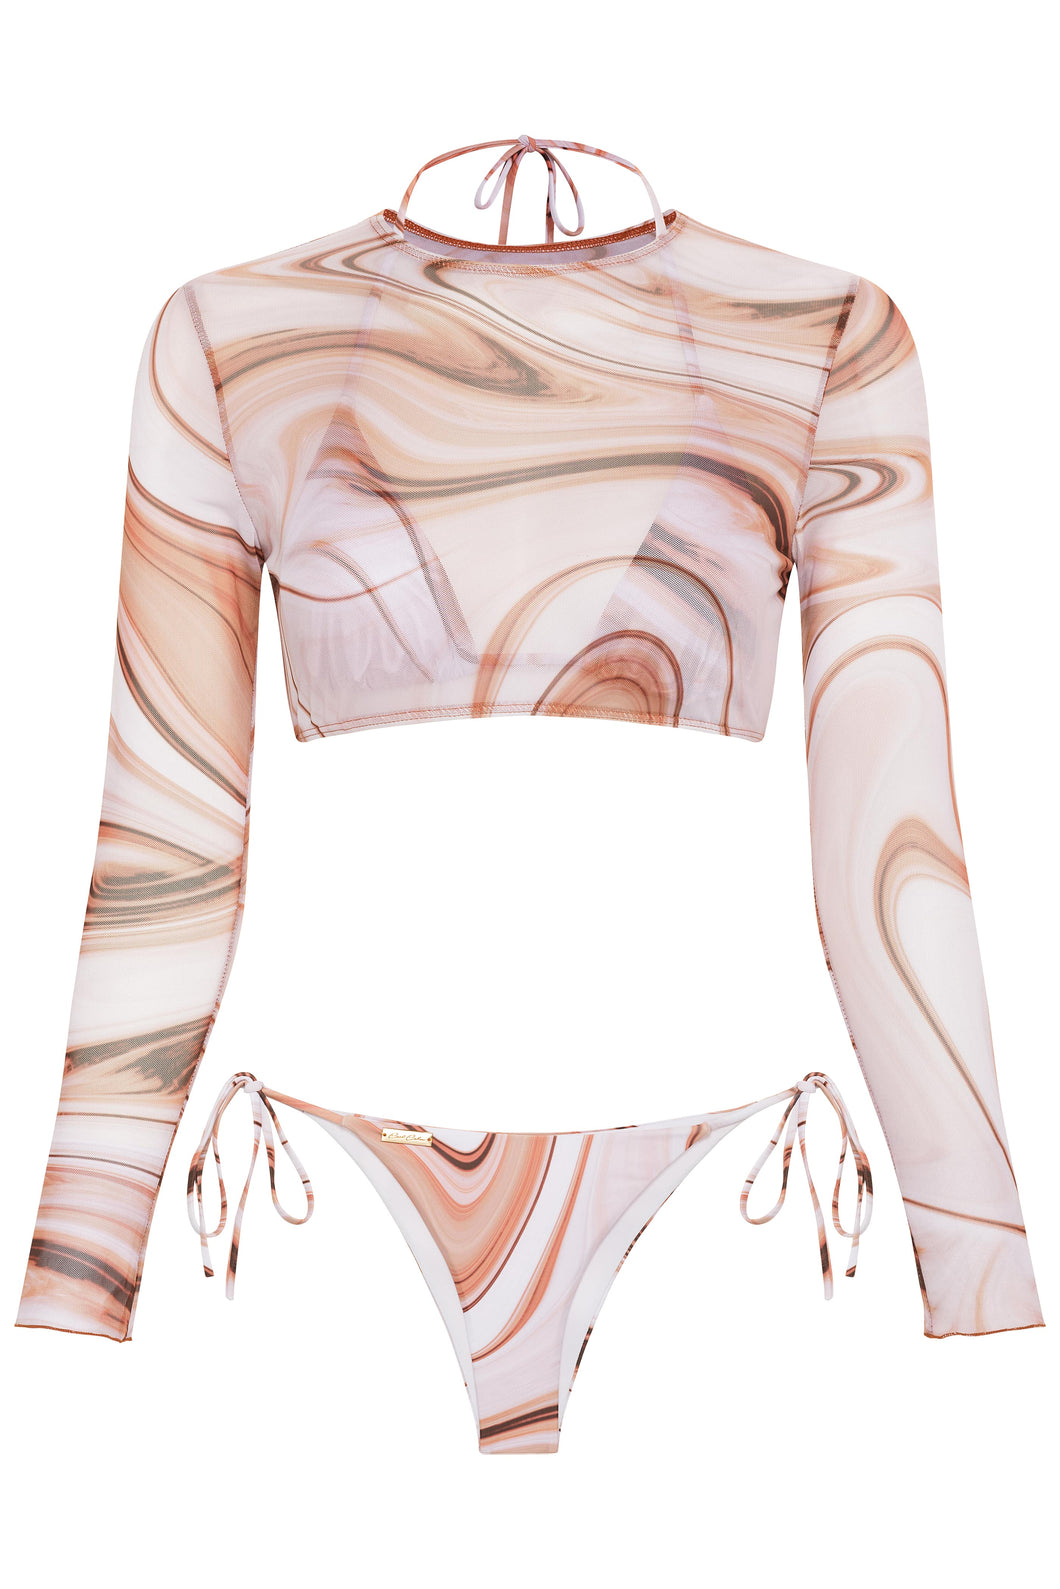 Gorgeous long sleeve crop top mesh cover up 3 piece bikini set